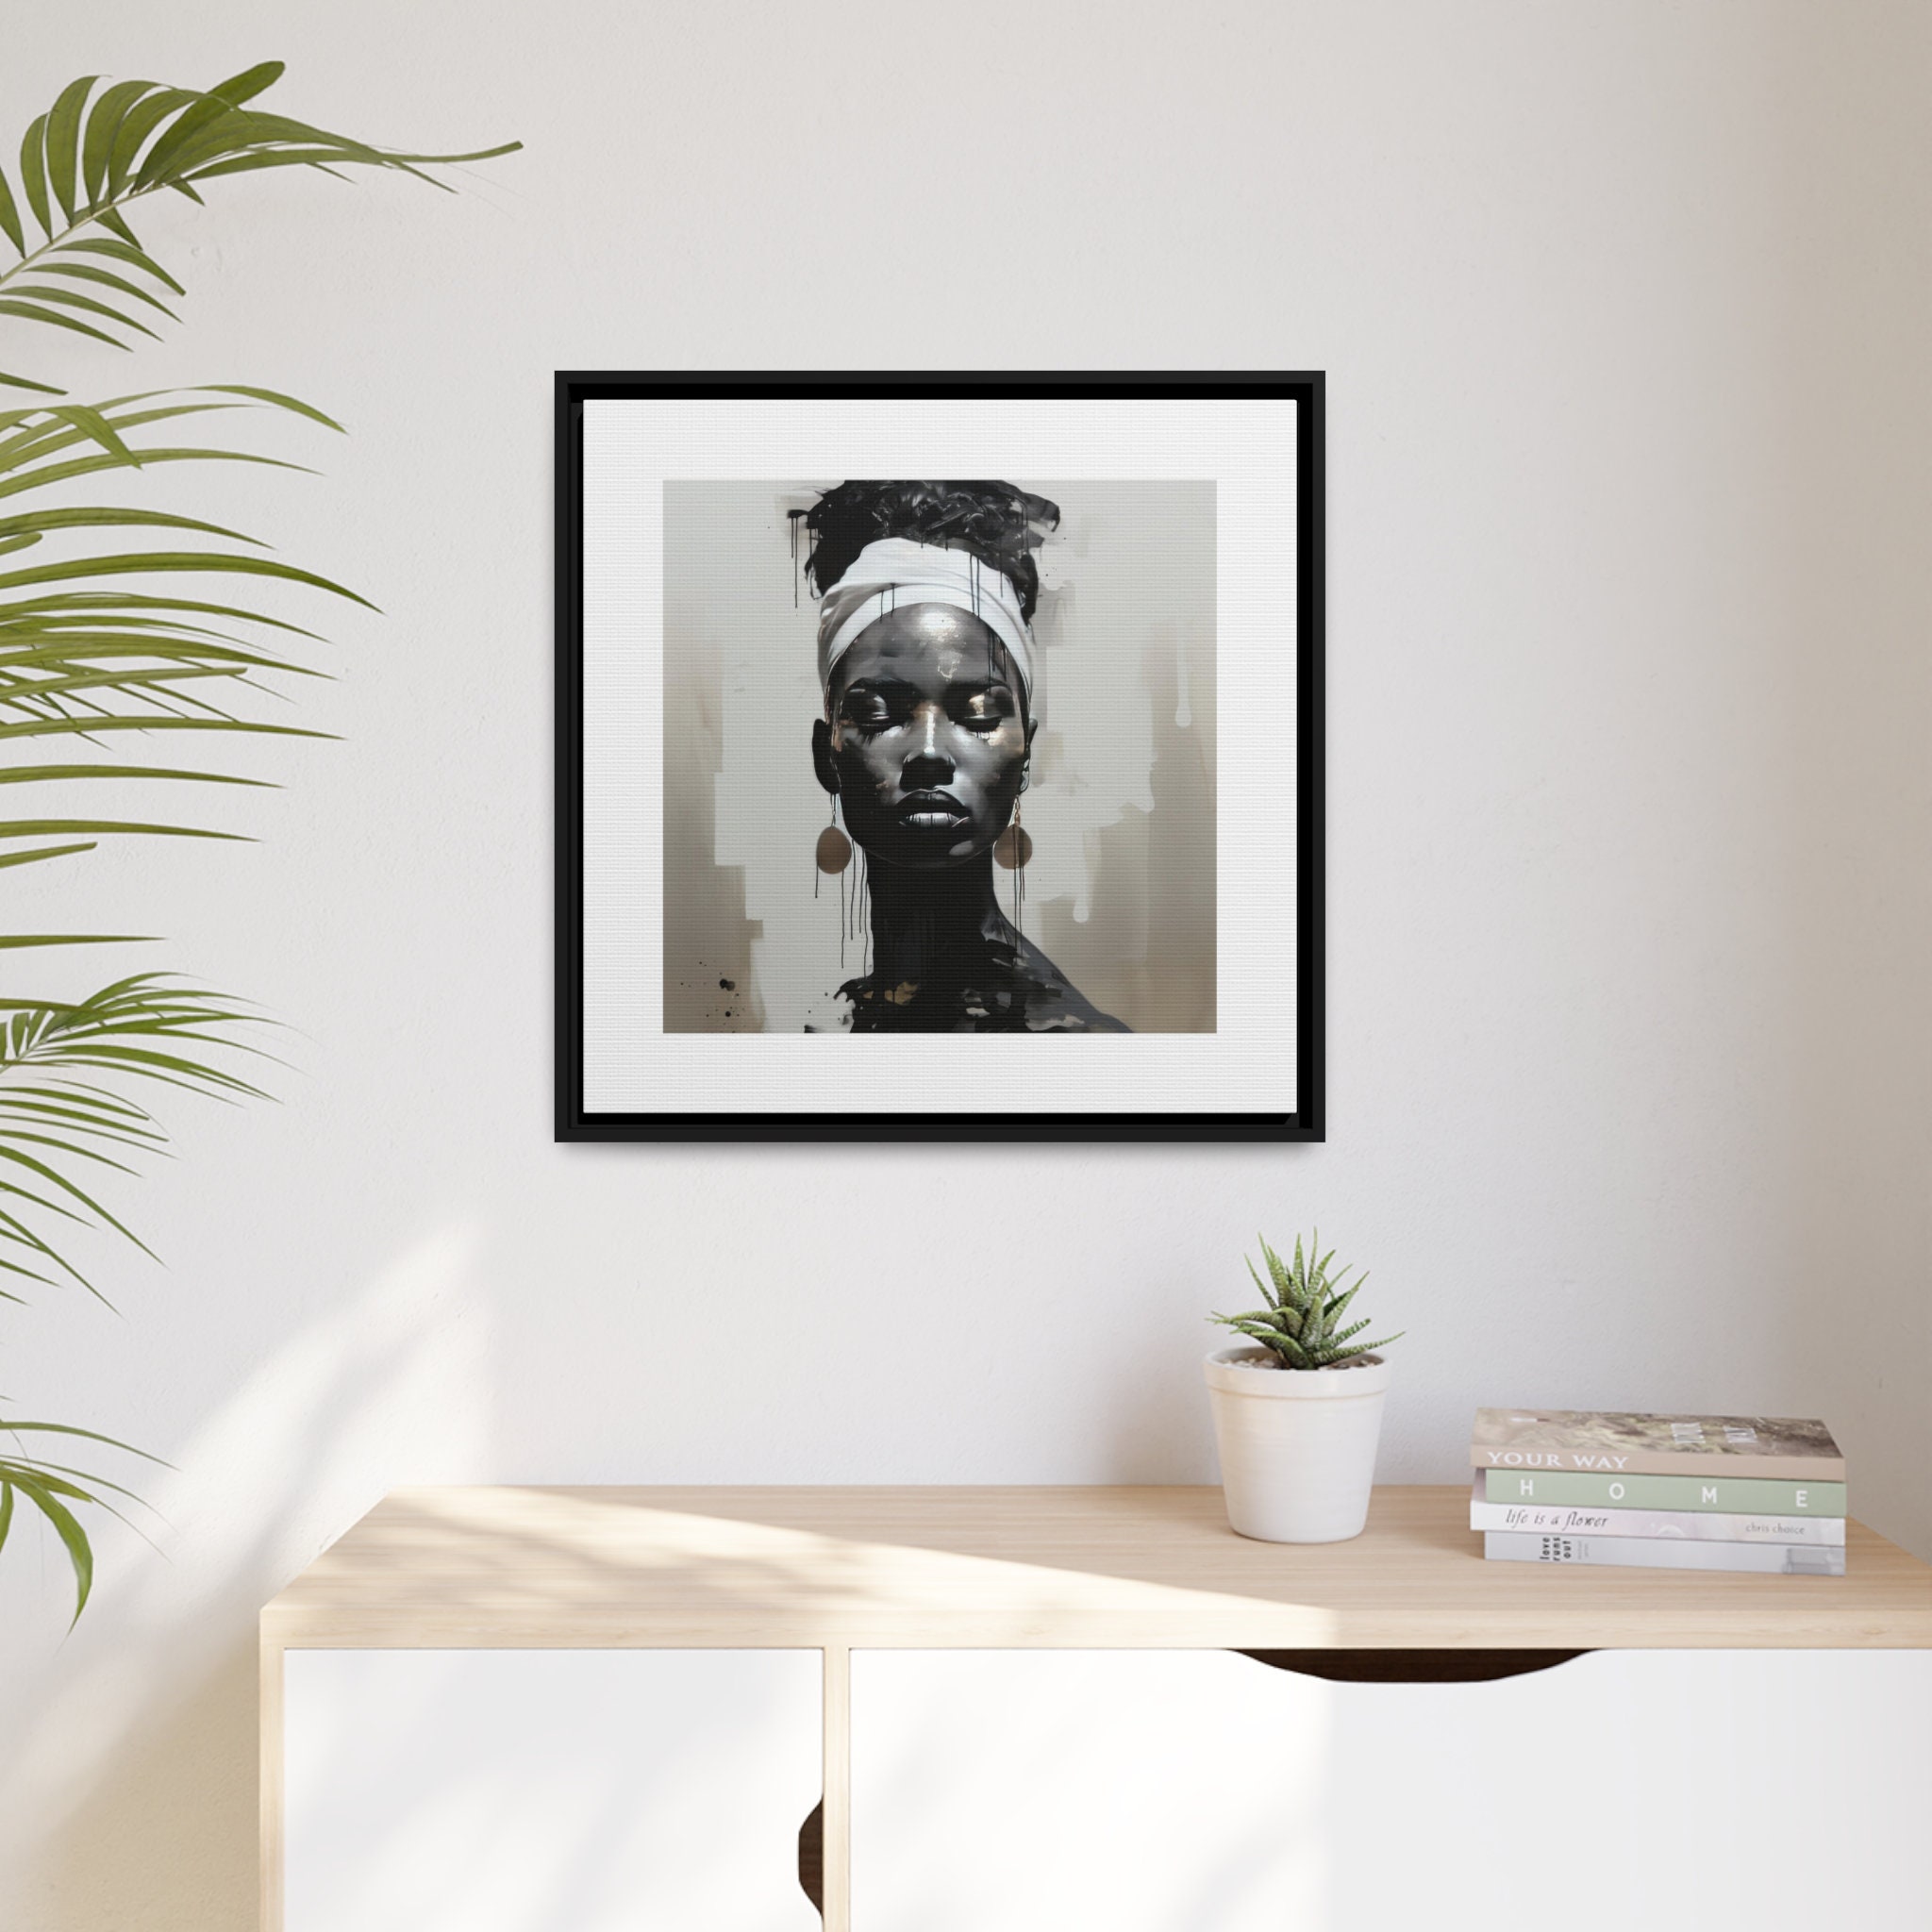 Elegant Noir: Black and White Portrait of Woman in Headwrap - Etsy